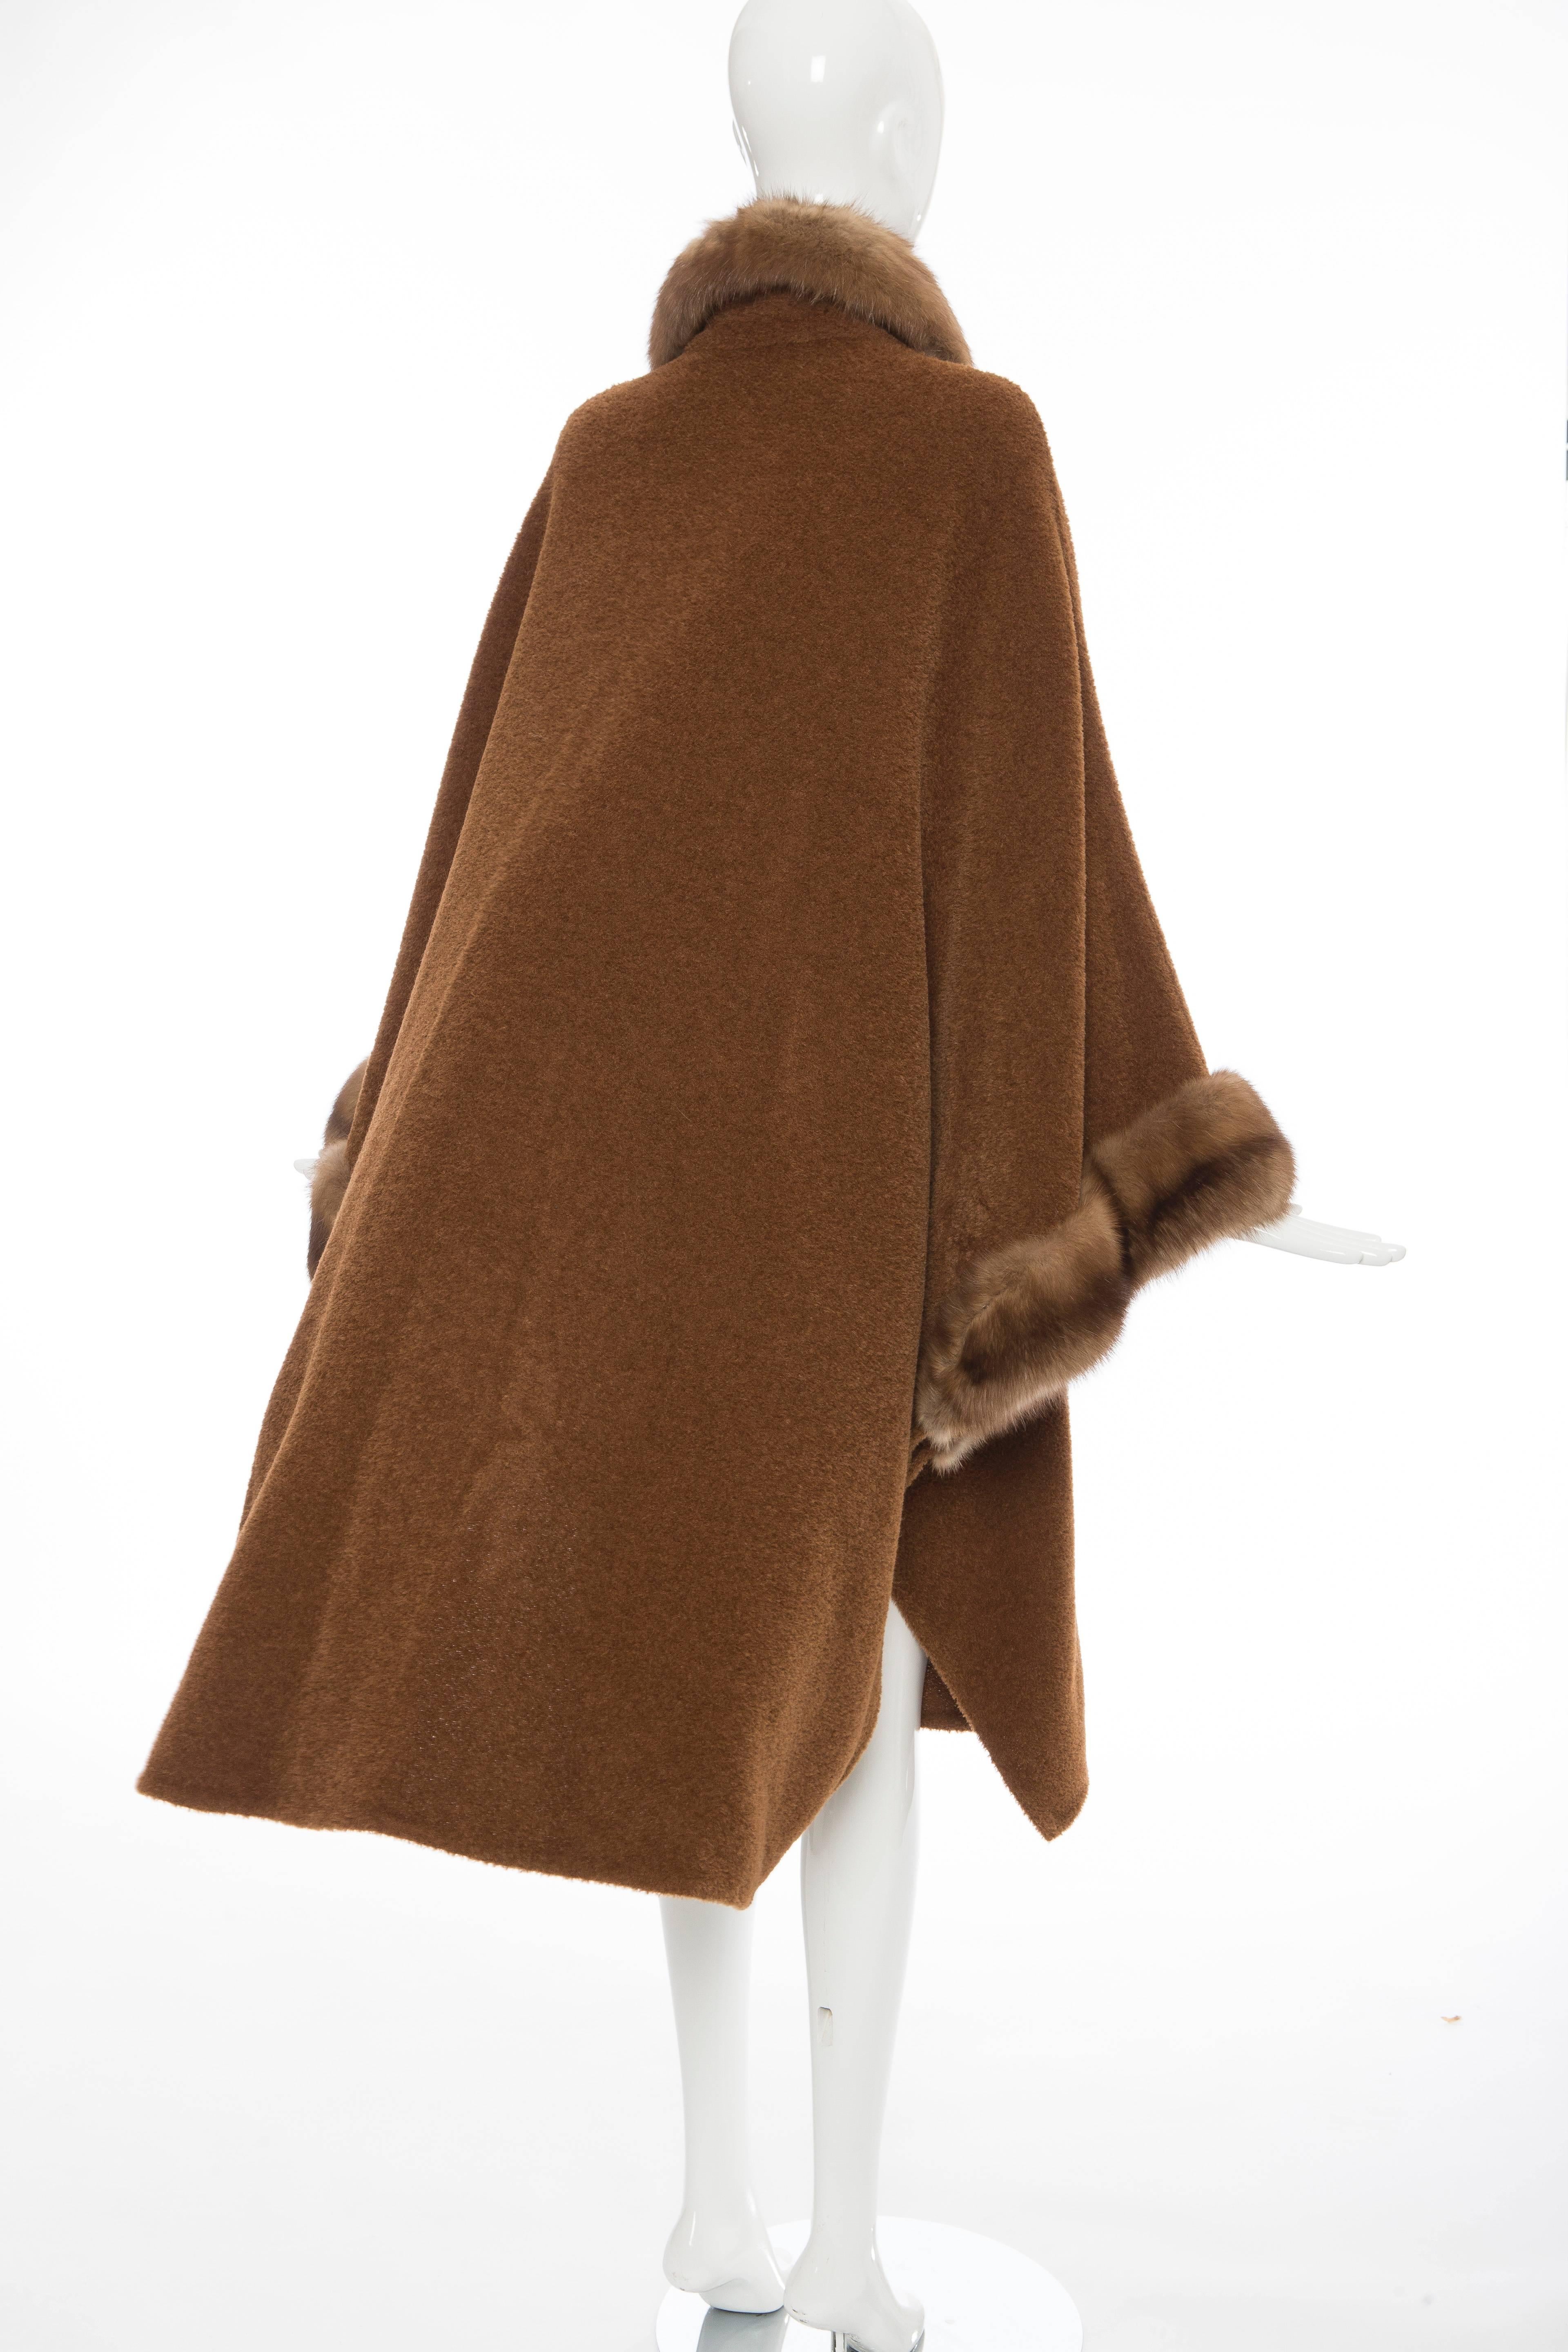 Revillon Alpaca Button Front Cloak - Cape With Sable Trim, Late 20th Century 2